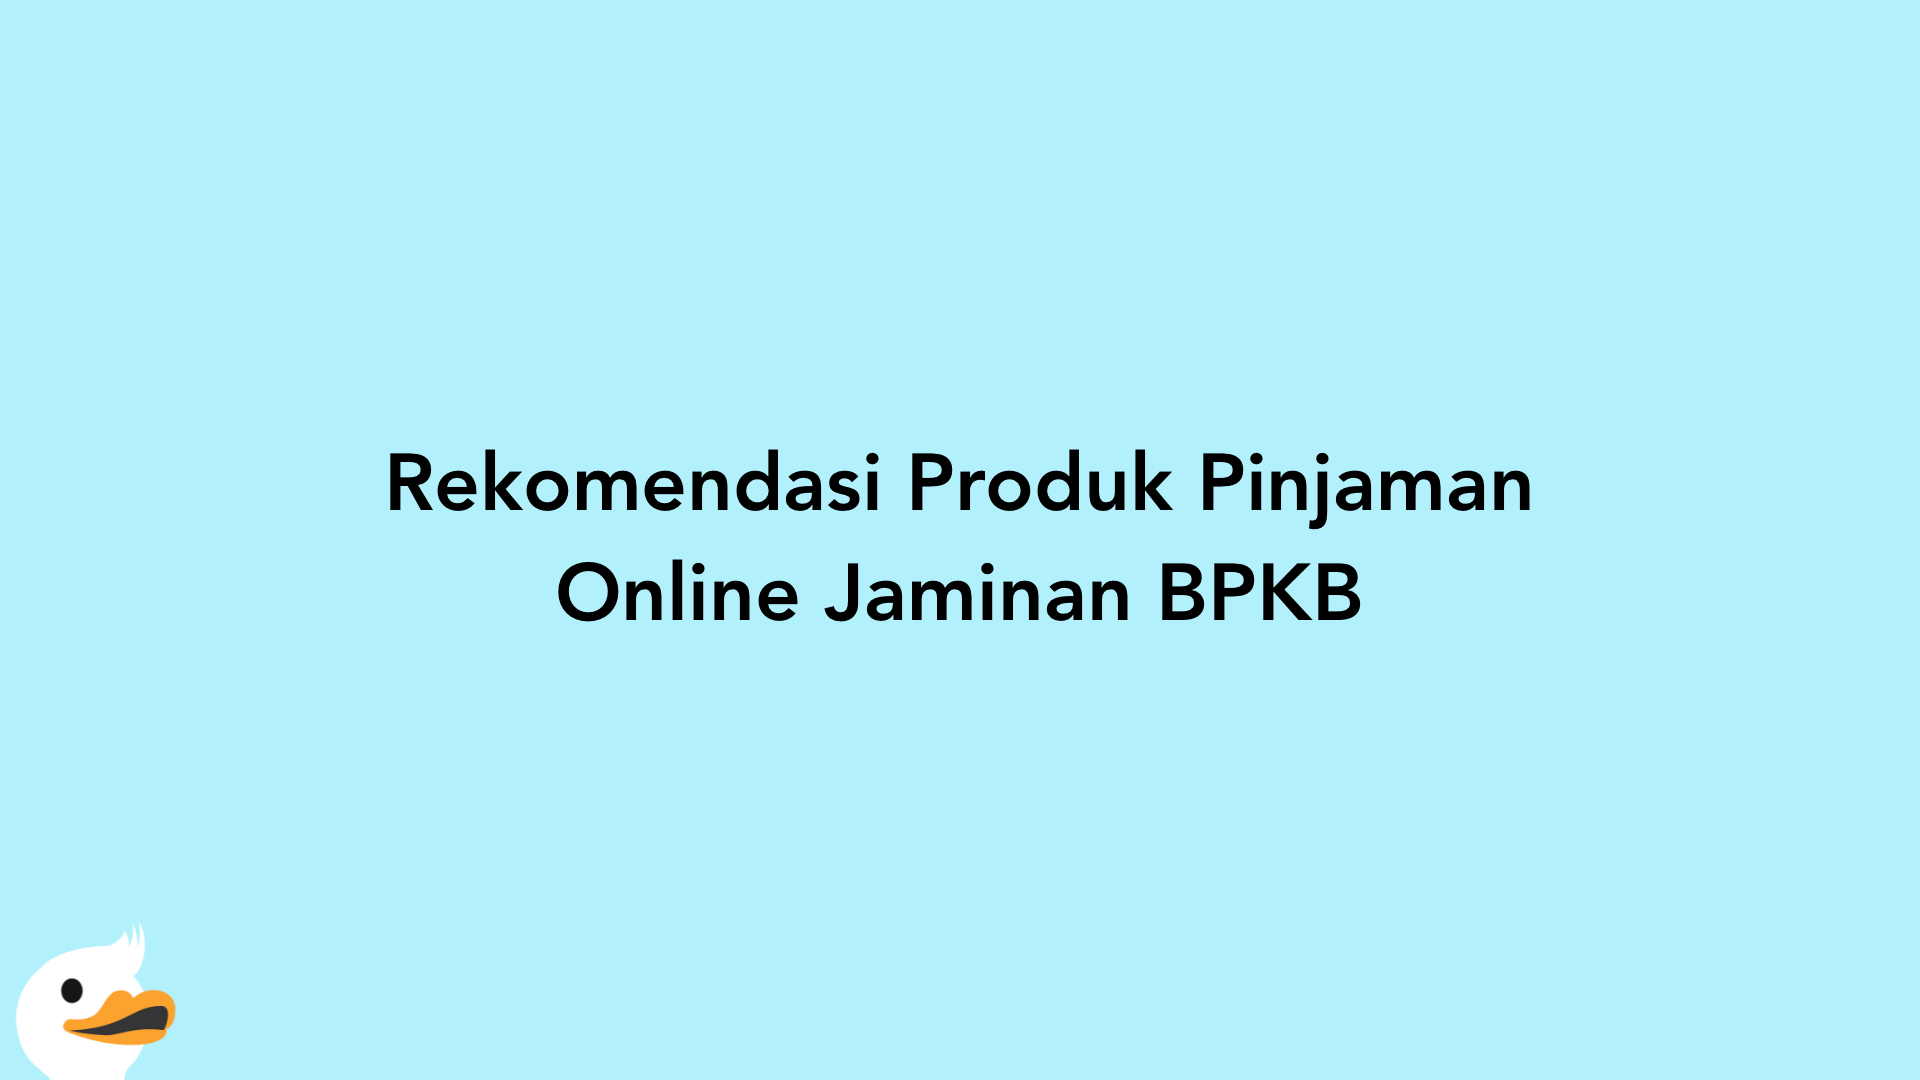 Rekomendasi Produk Pinjaman Online Jaminan BPKB